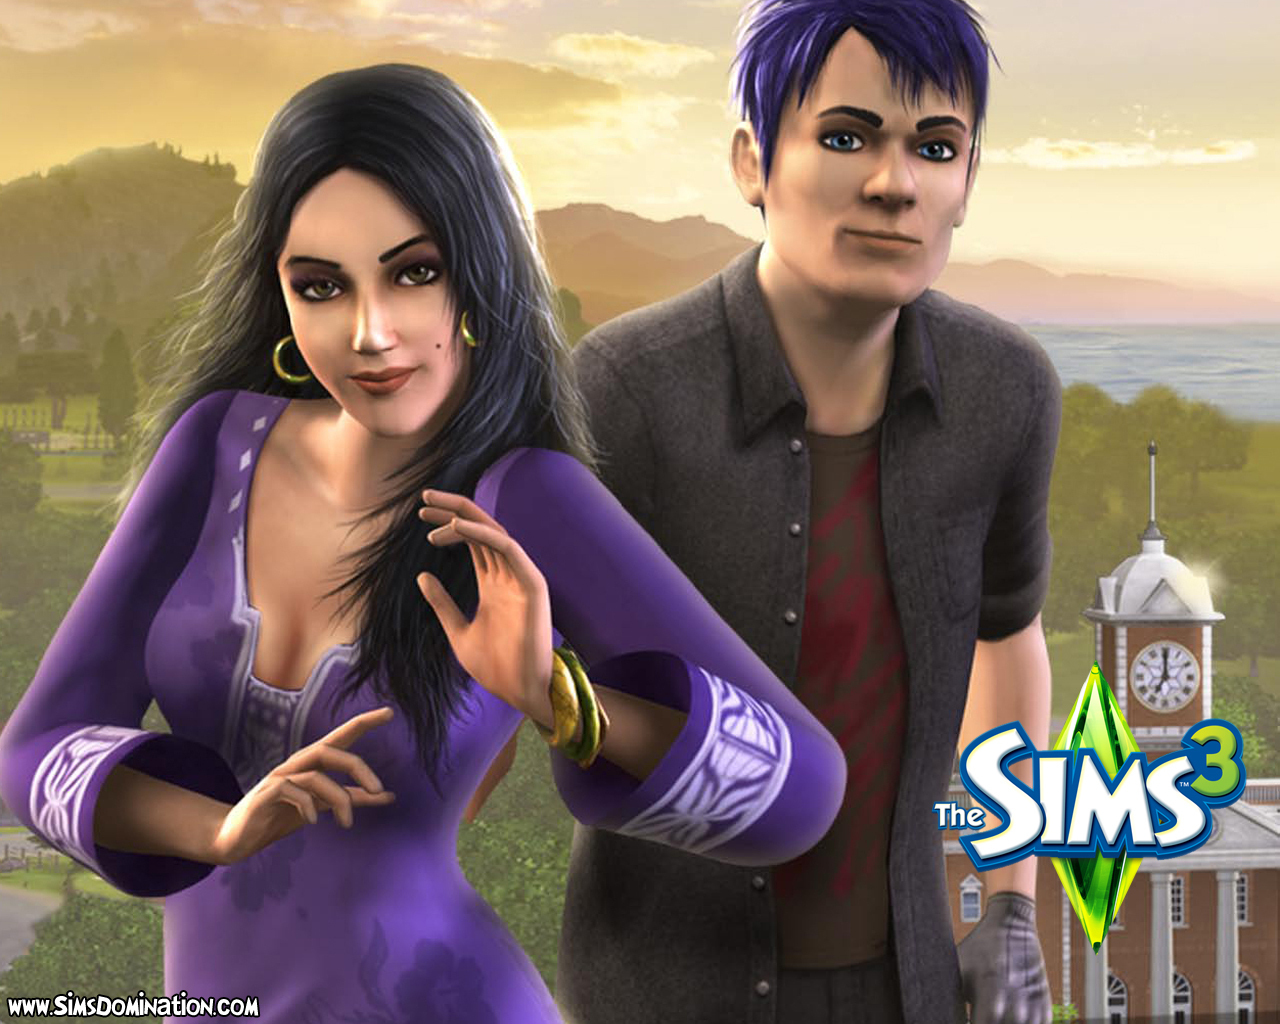 Sims 3 - The Sims 3 Wallpaper (3807951) - Fanpop